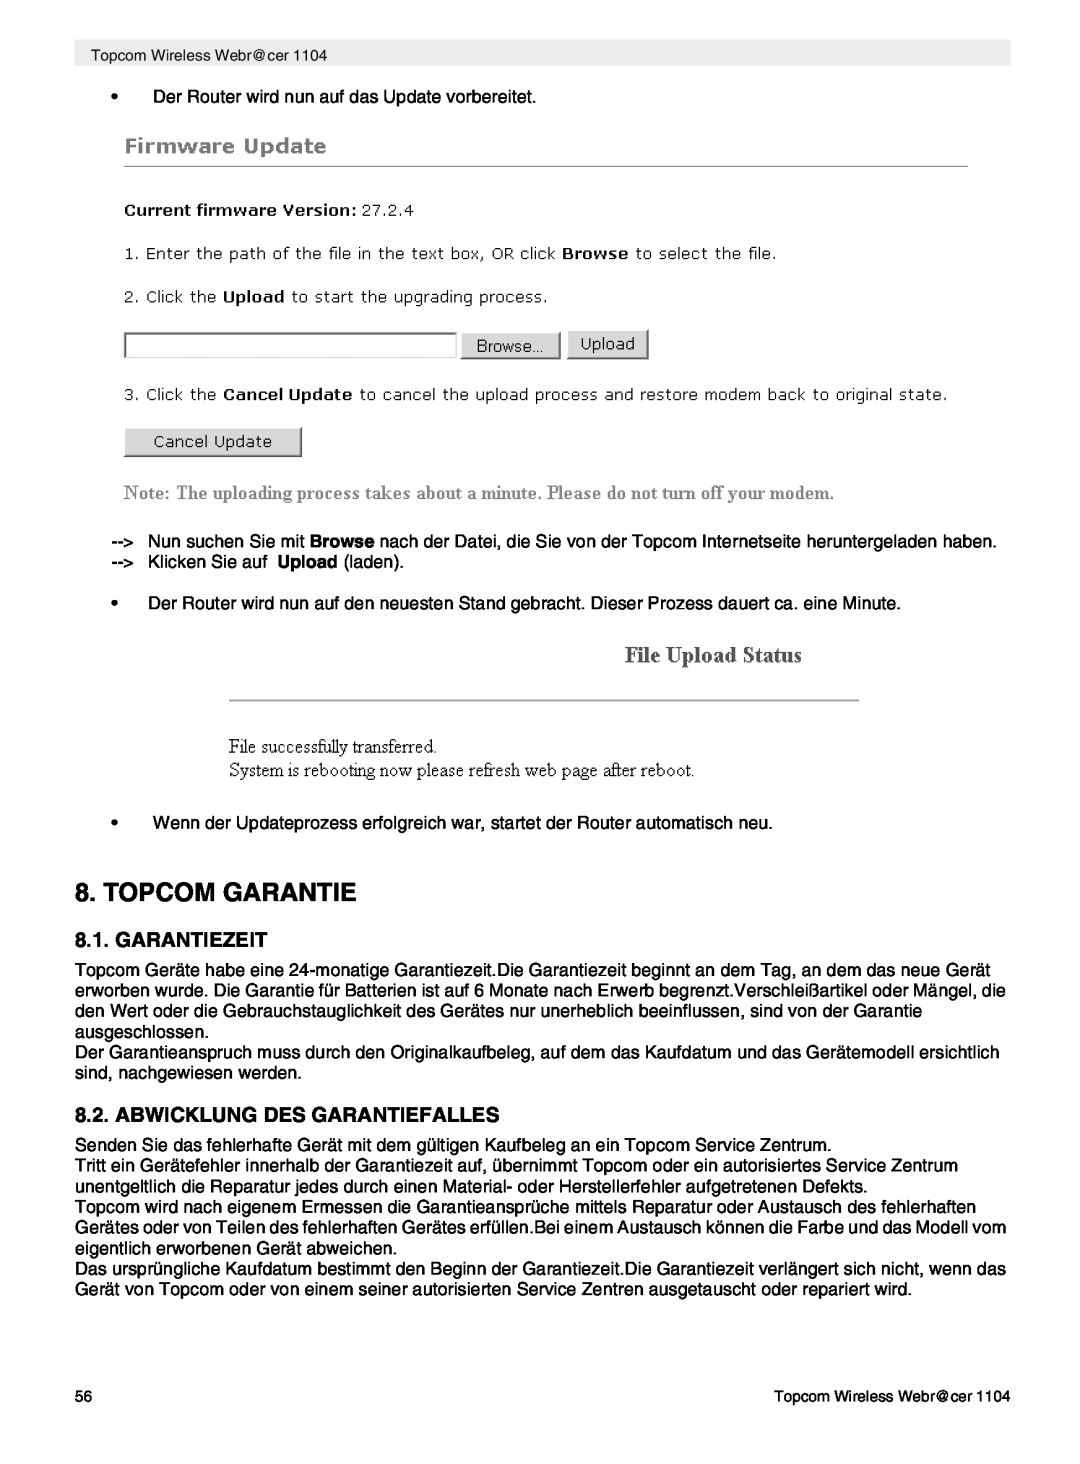 Topcom 1104 manual do utilizador Topcom Garantie, Garantiezeit, Abwicklung Des Garantiefalles 